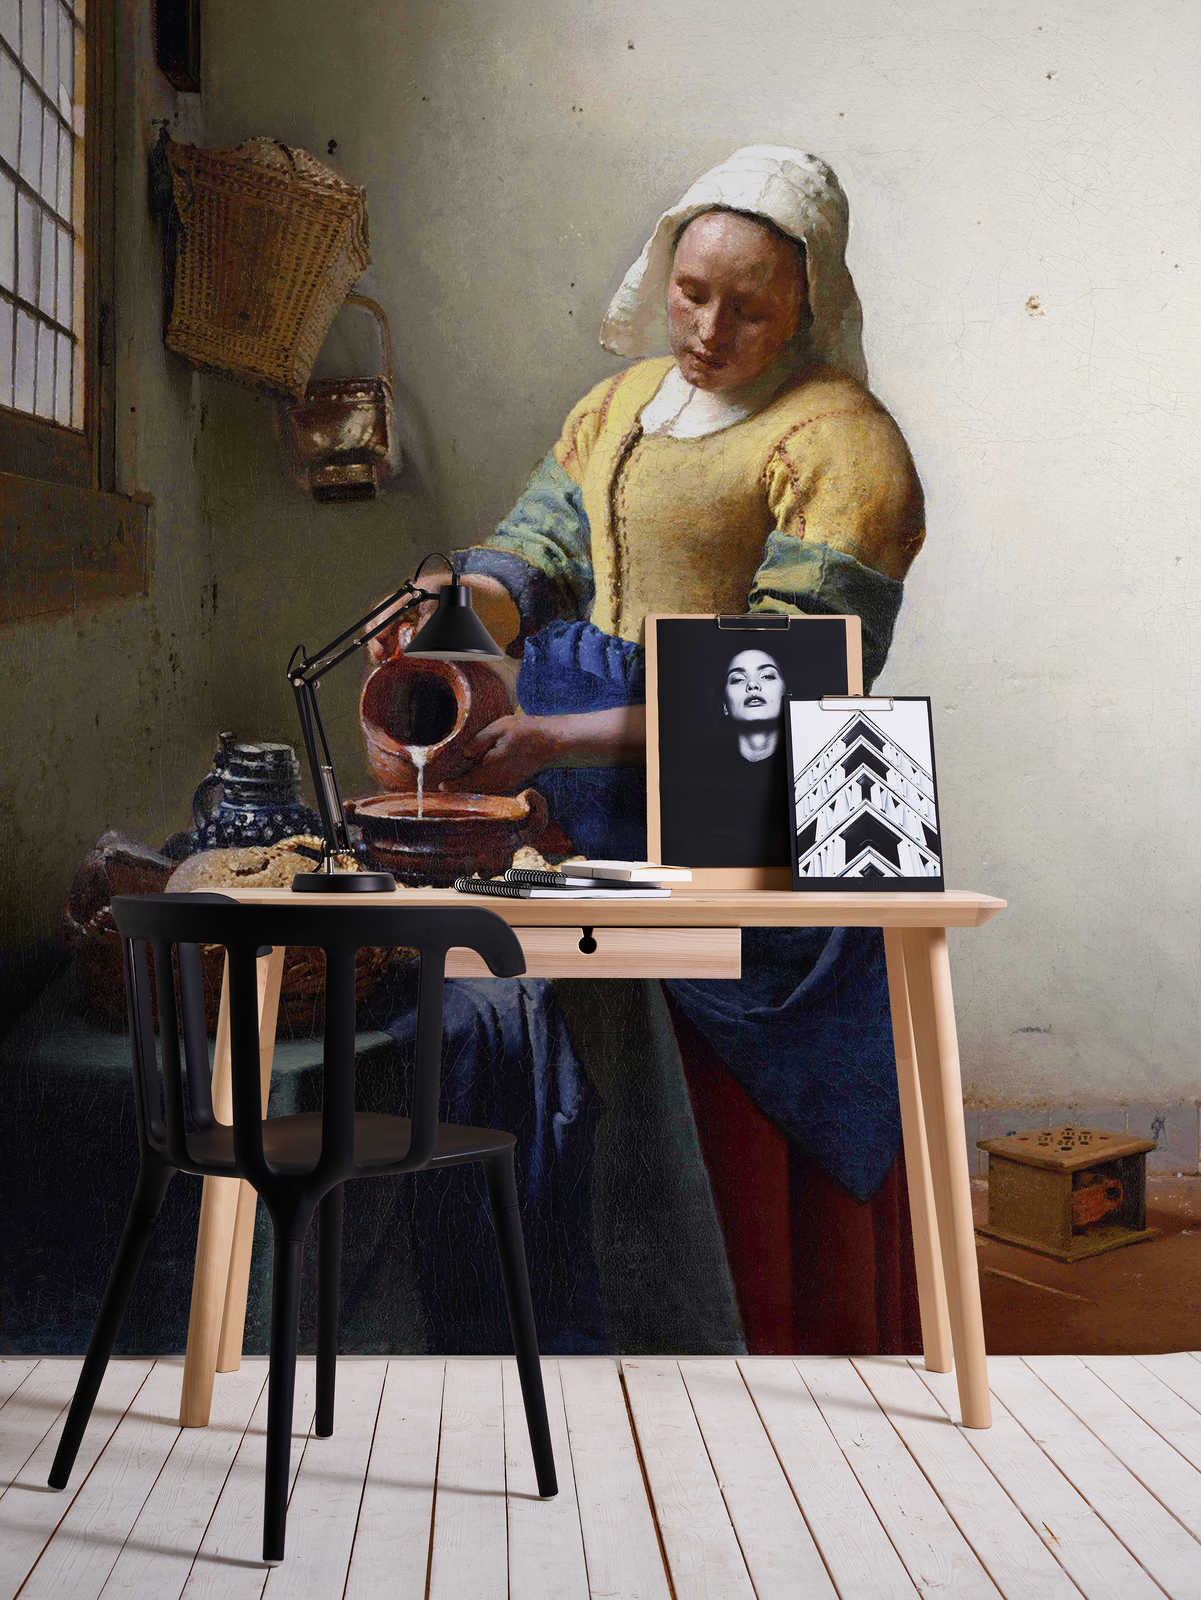             Fototapete "Dienstmagd mit Milchkrug" von Jan Vermeer
        